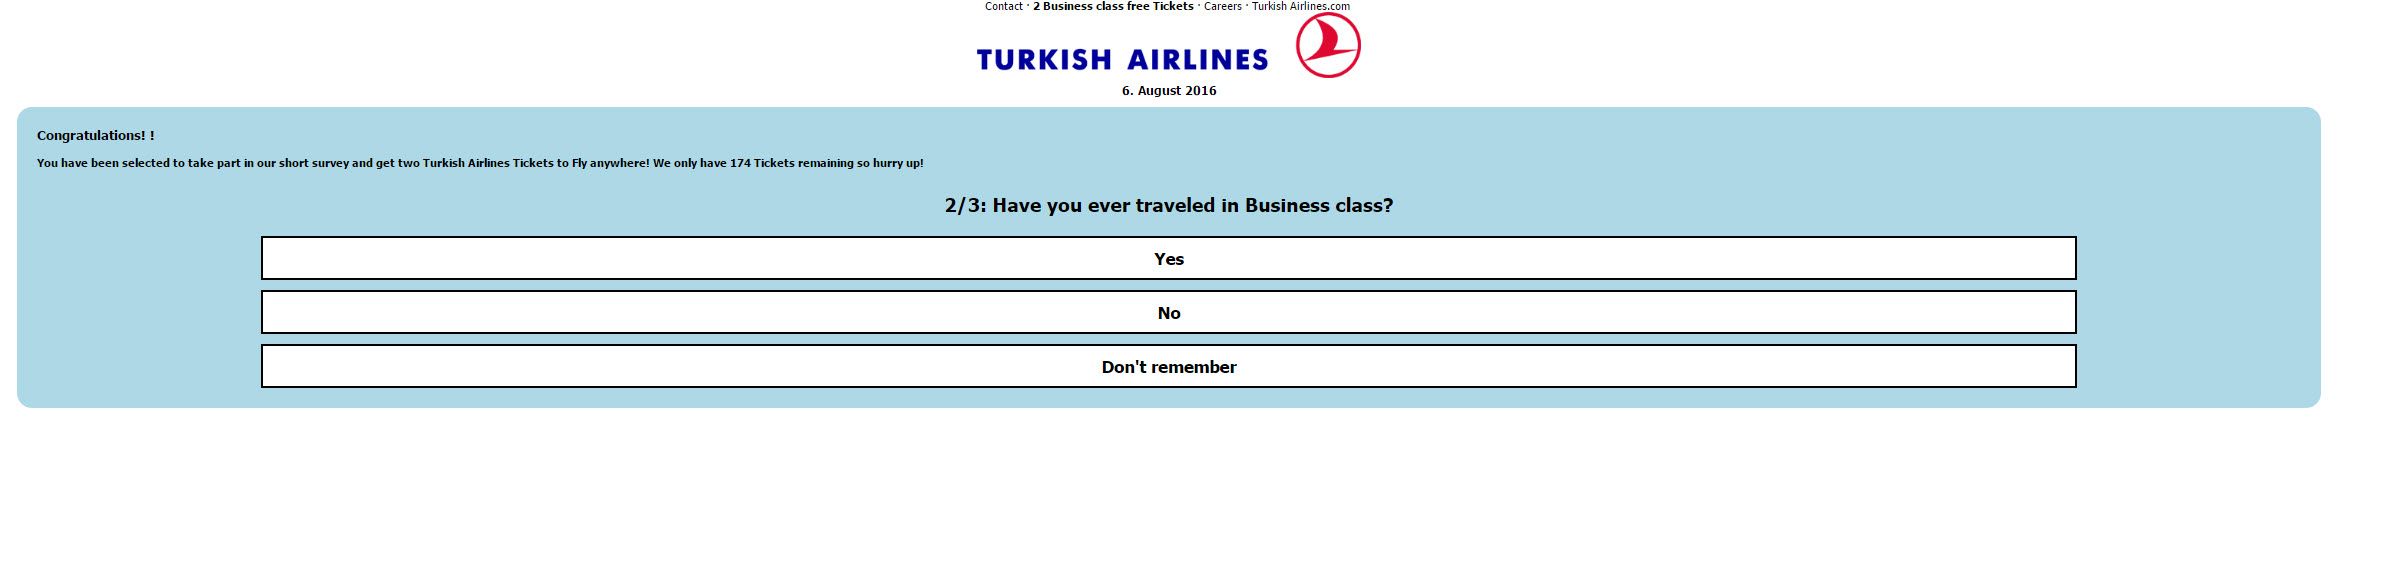 bedava-bilet-dolandiriciligi-turkish-airlines-4.jpg